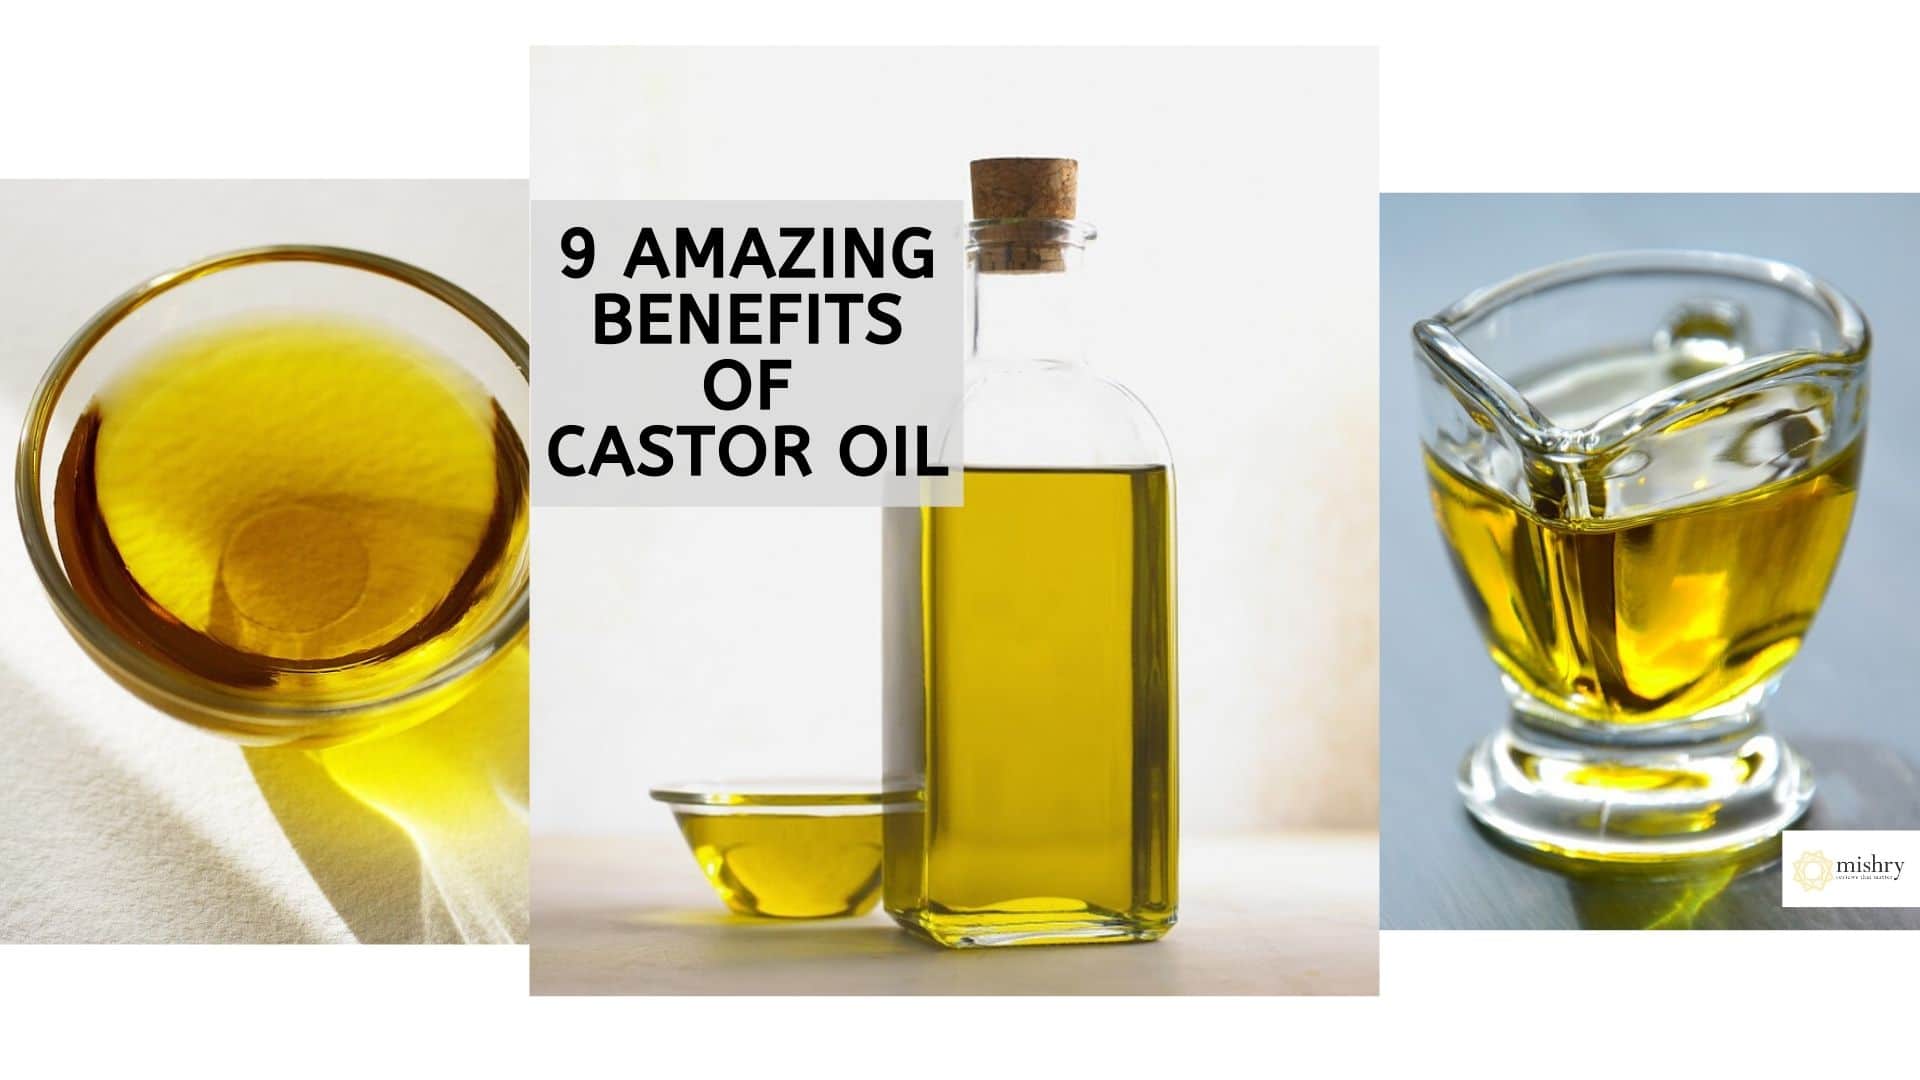 Castor Oil_ Amazing Benefits